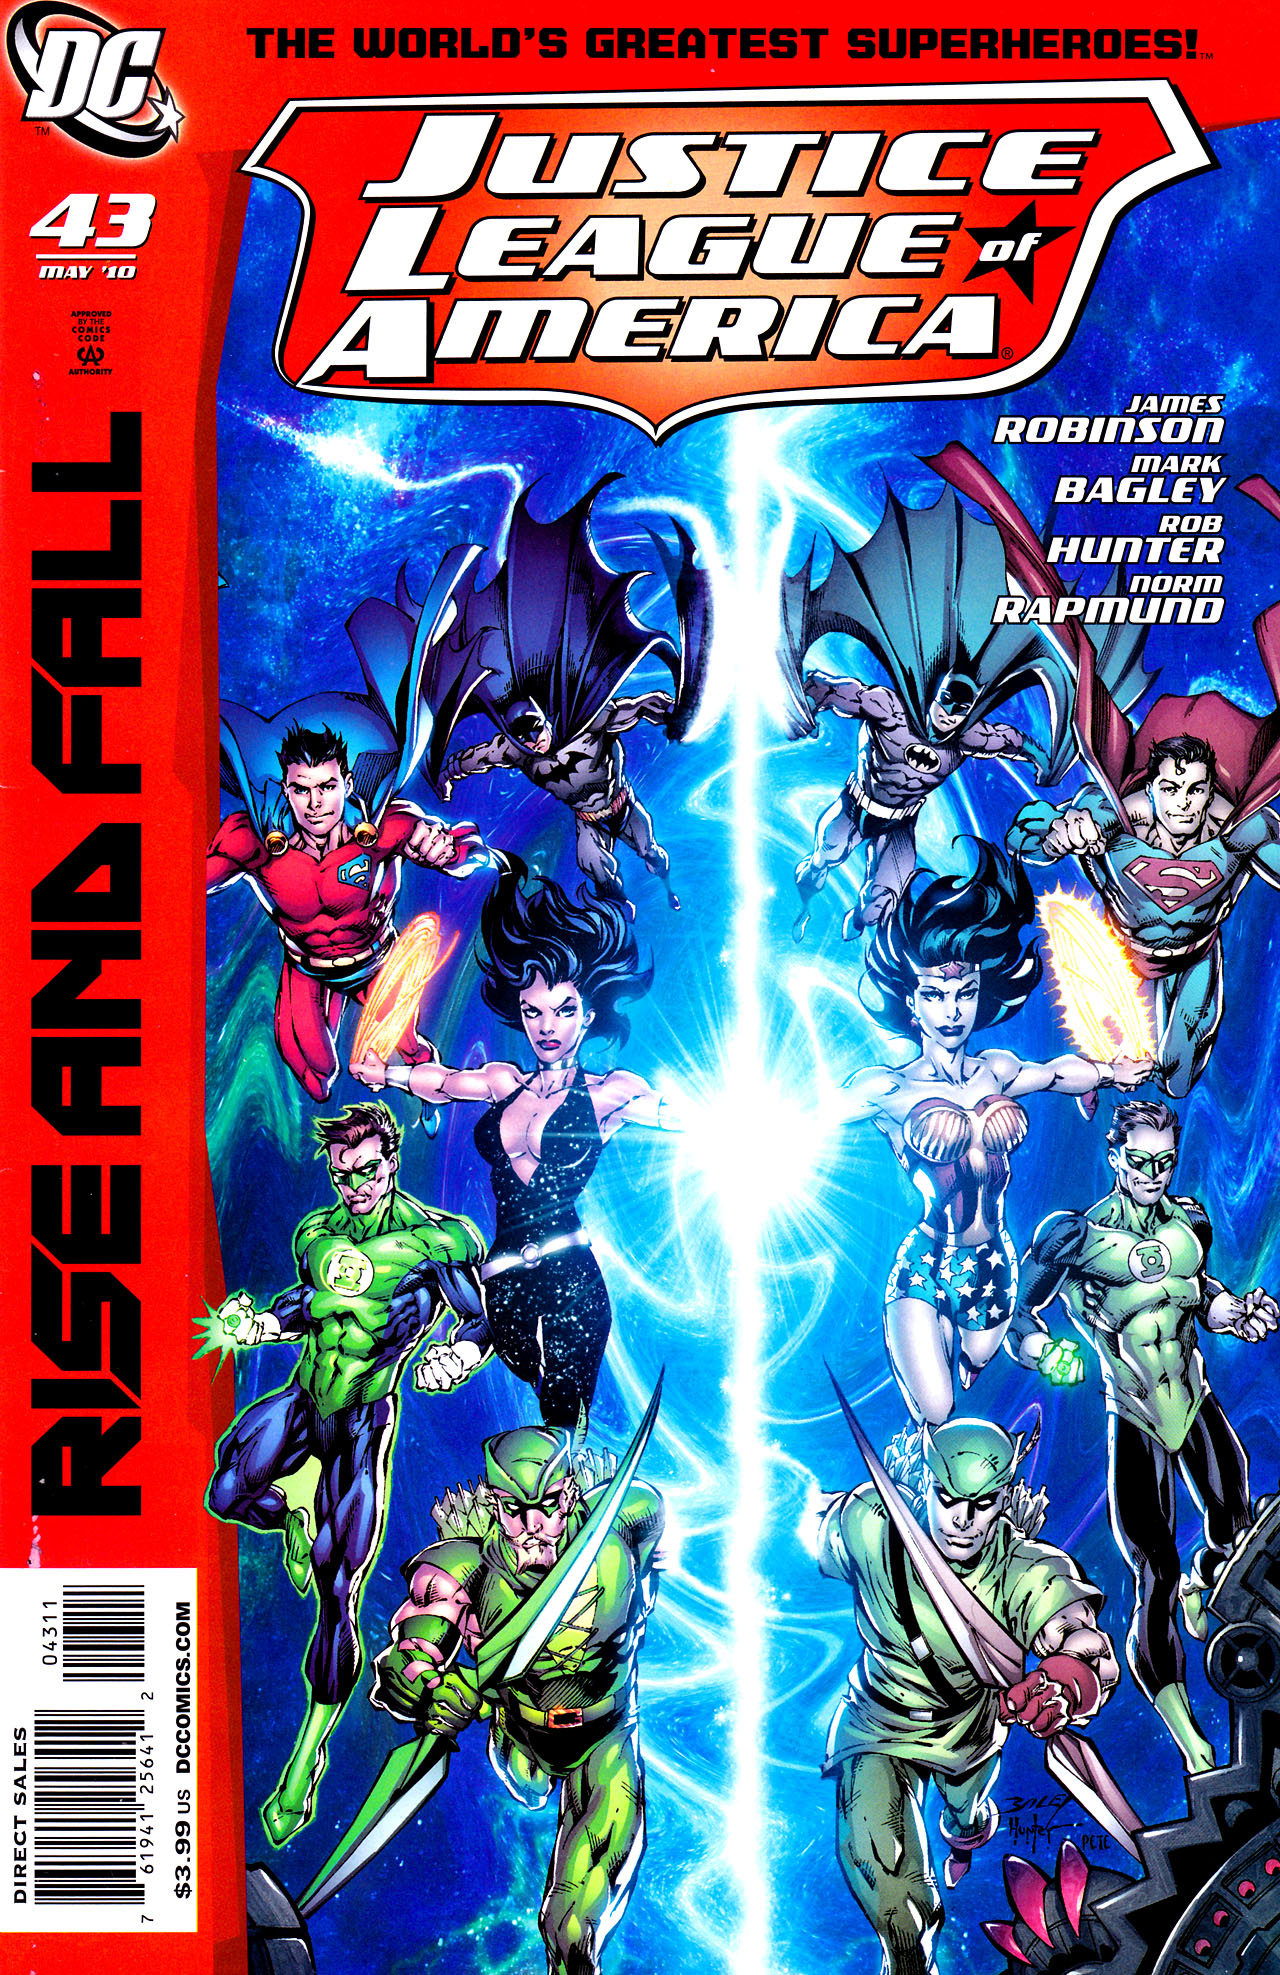 Justice League of America Vol. 2 #43